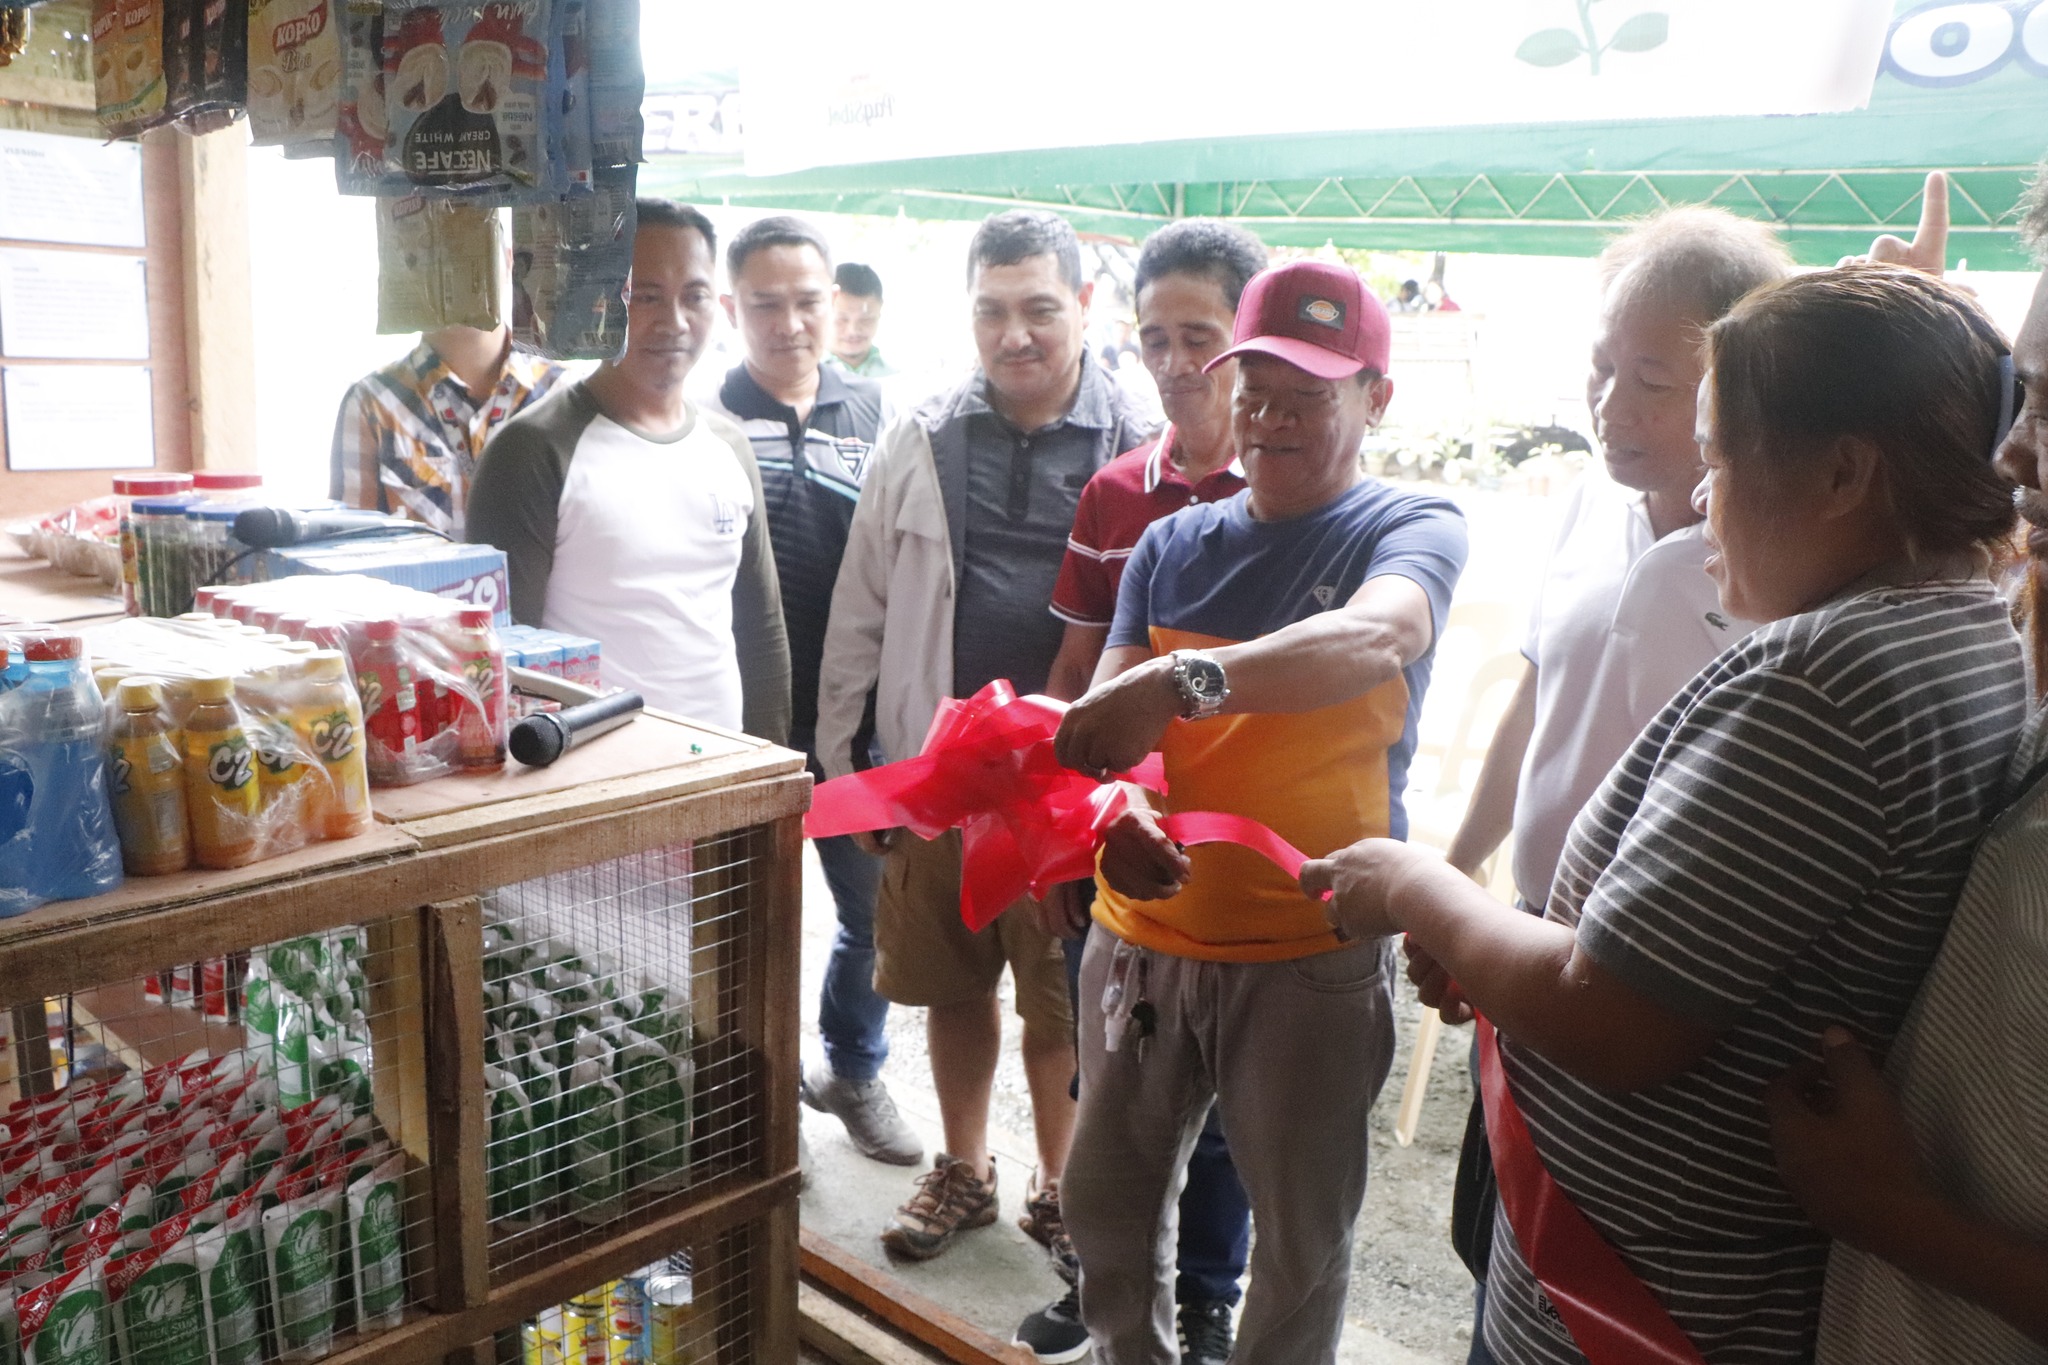 66 people’s orgs get livelihood aid in DdO | Edge Davao